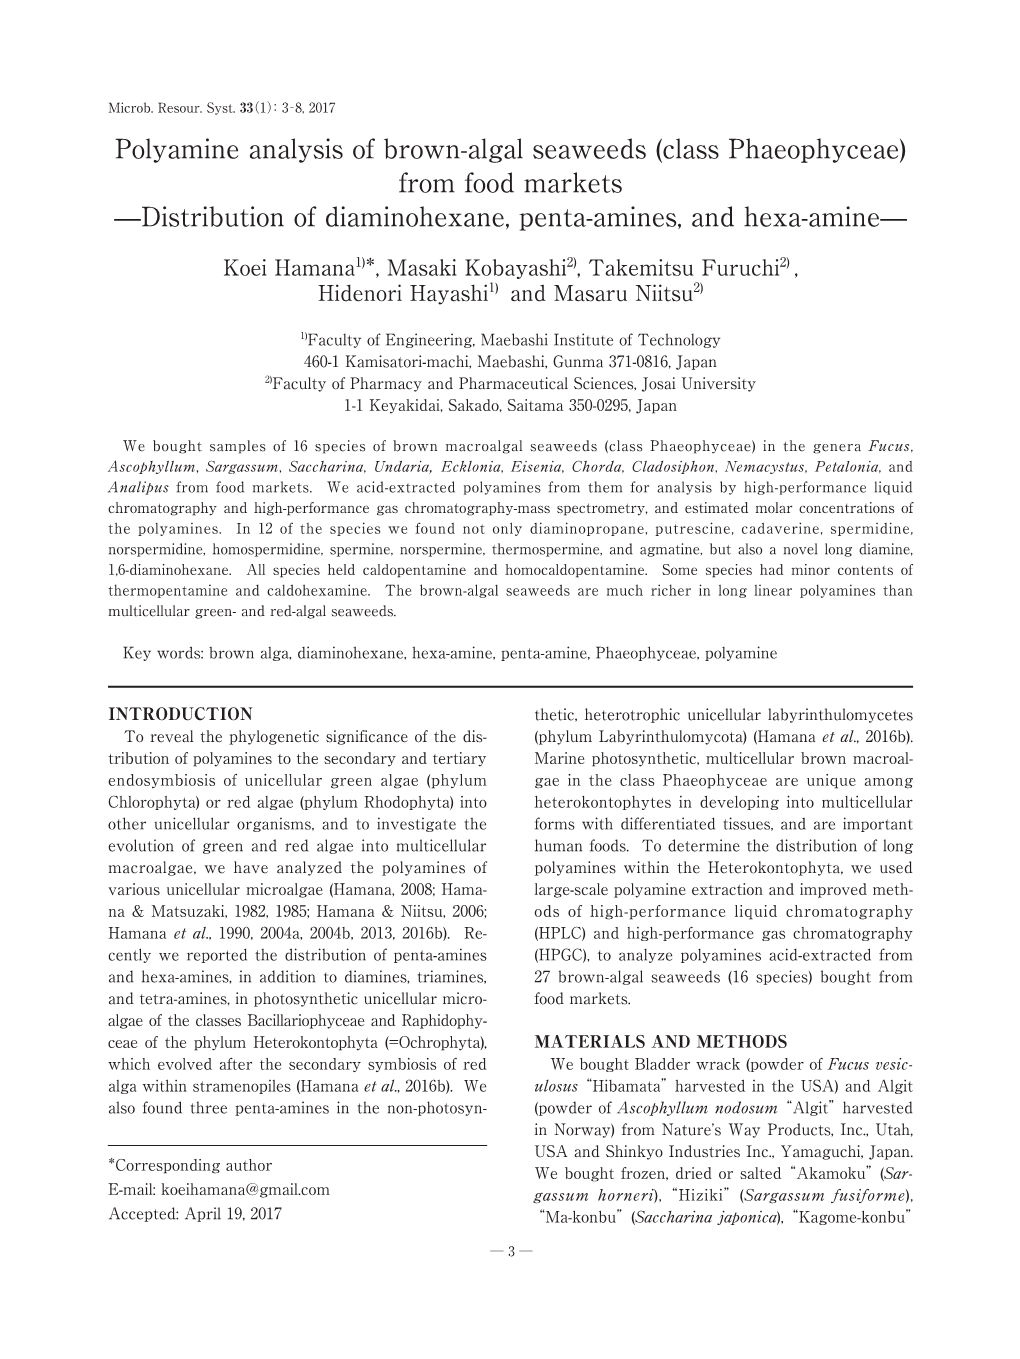 Polyamine Analysis of Brown-Algal Seaweeds (Class Phaeophyceae) from Food Markets —Distribution of Diaminohexane, Penta-Amines, and Hexa-Amine—